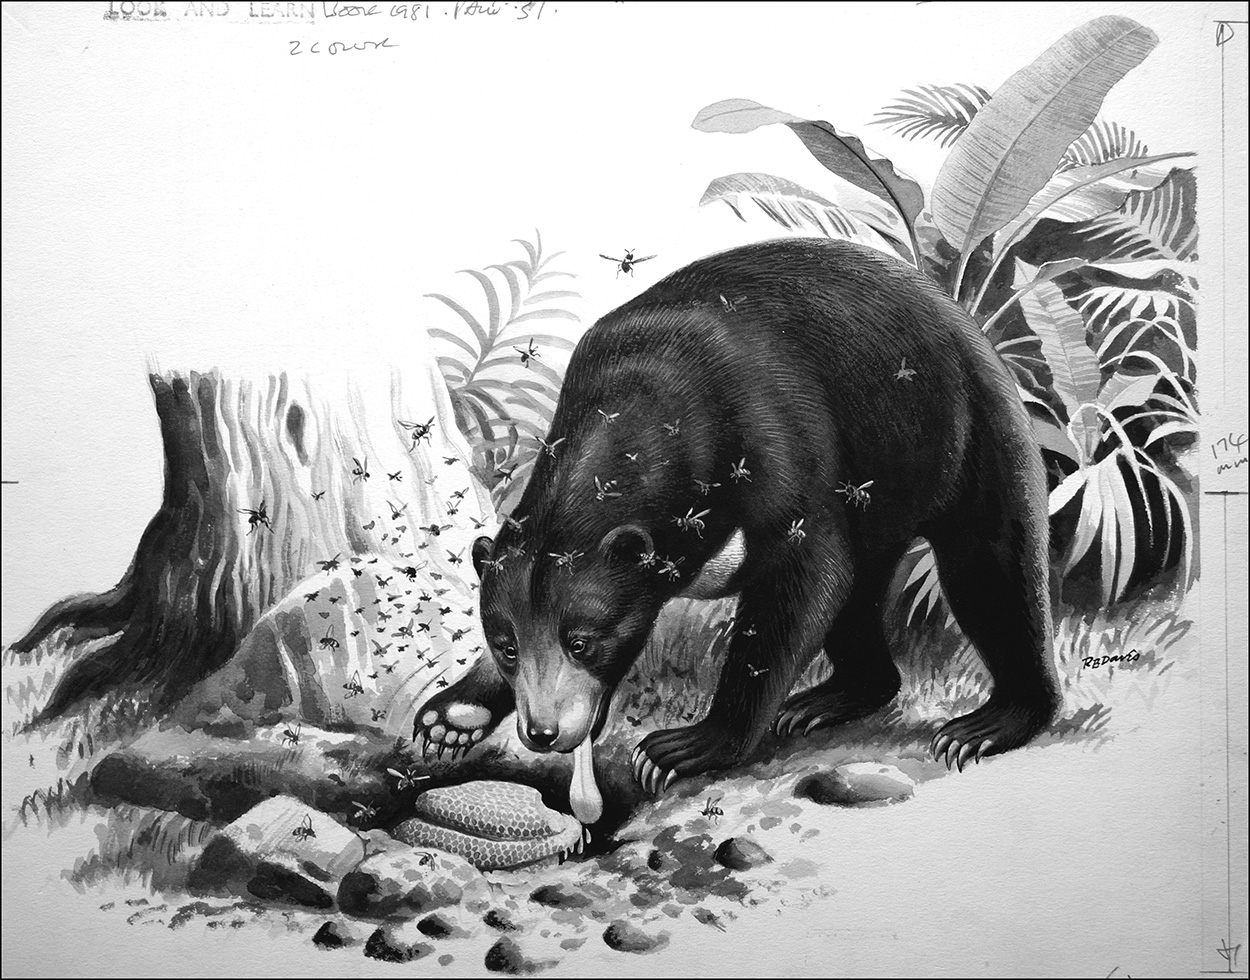 Malayan Sun Bear (Original) (Signed) art by Reginald B Davis at The Illustration Art Gallery